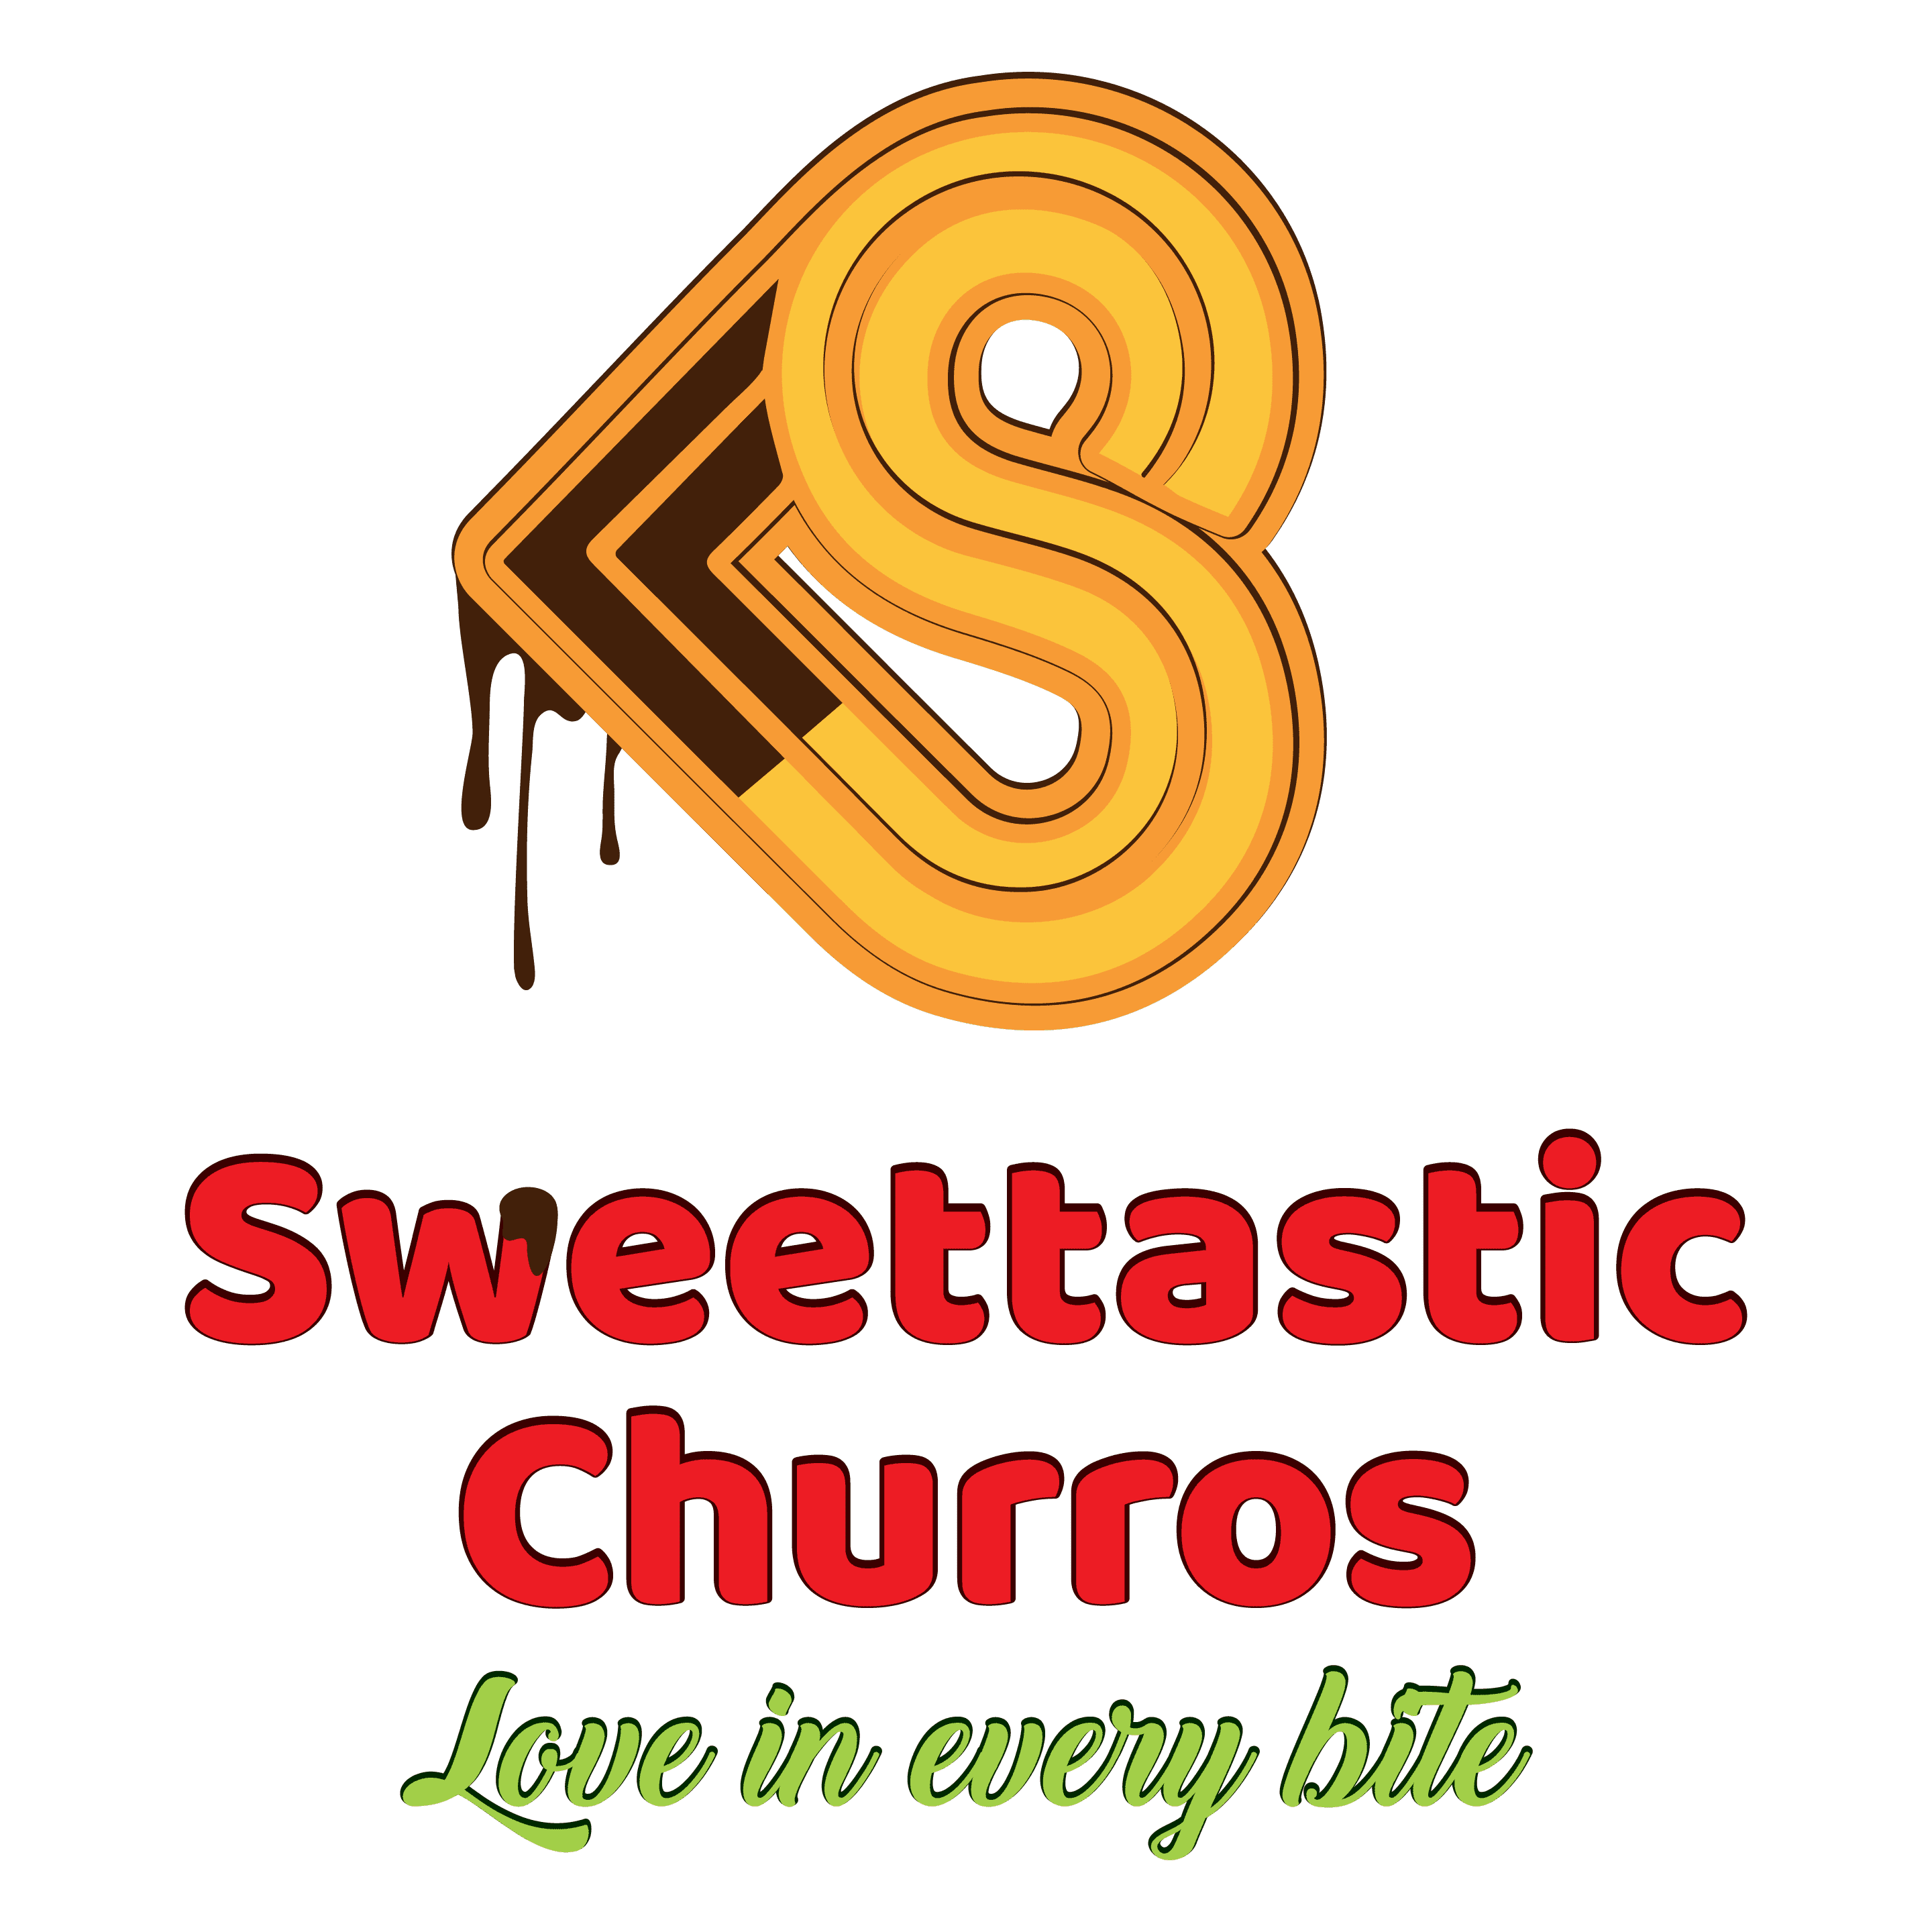 Sweettastic Churros